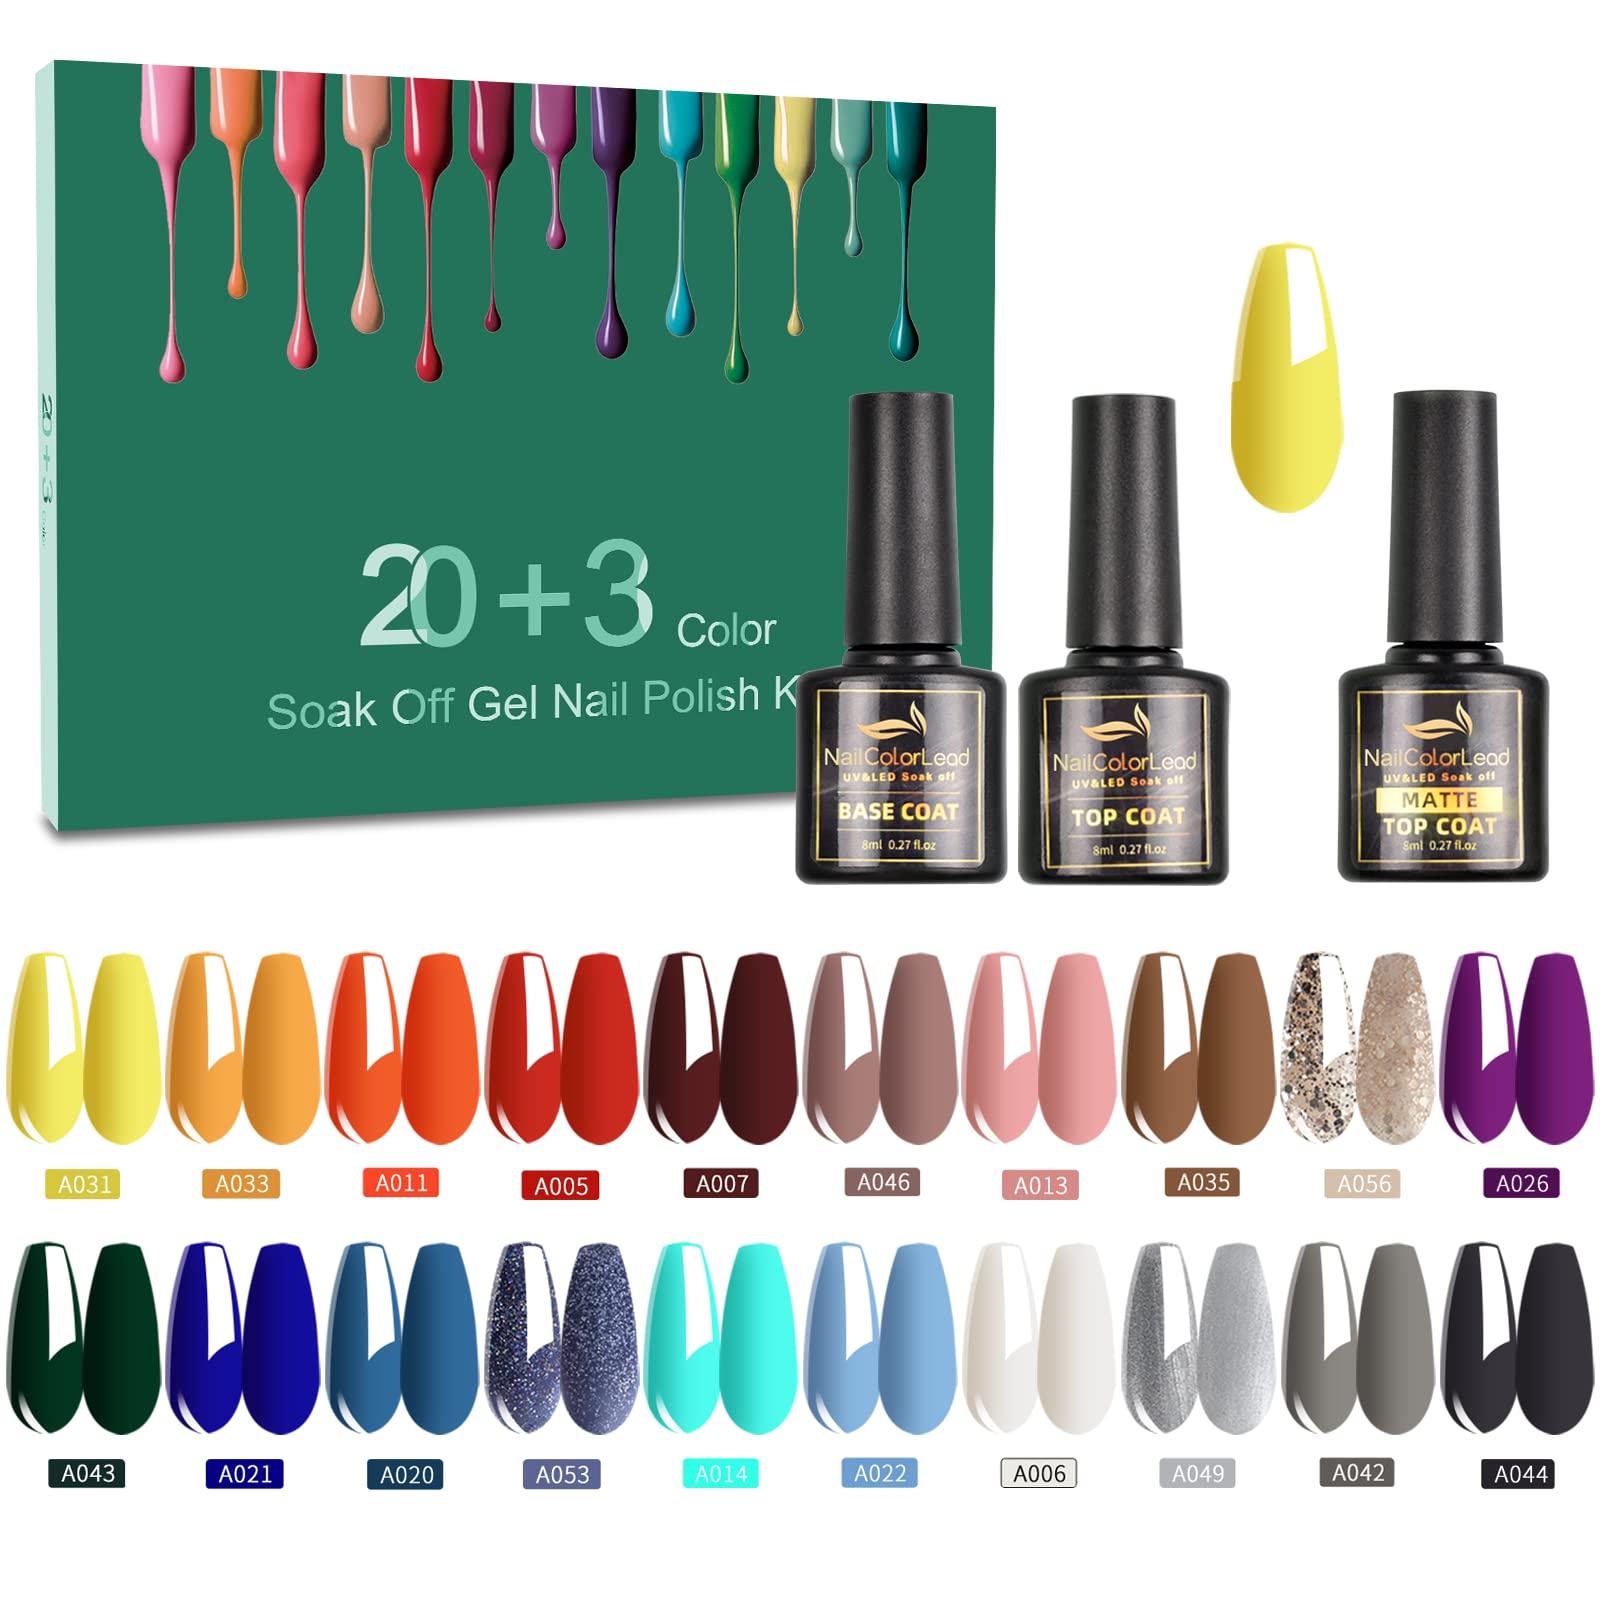 Erarrow Gel Nail Polish Set - Nail Polish 20 Colors, Popular Nail Art Colors UV LED Soak Off Nail Kit (20 + 3) 23A PCS